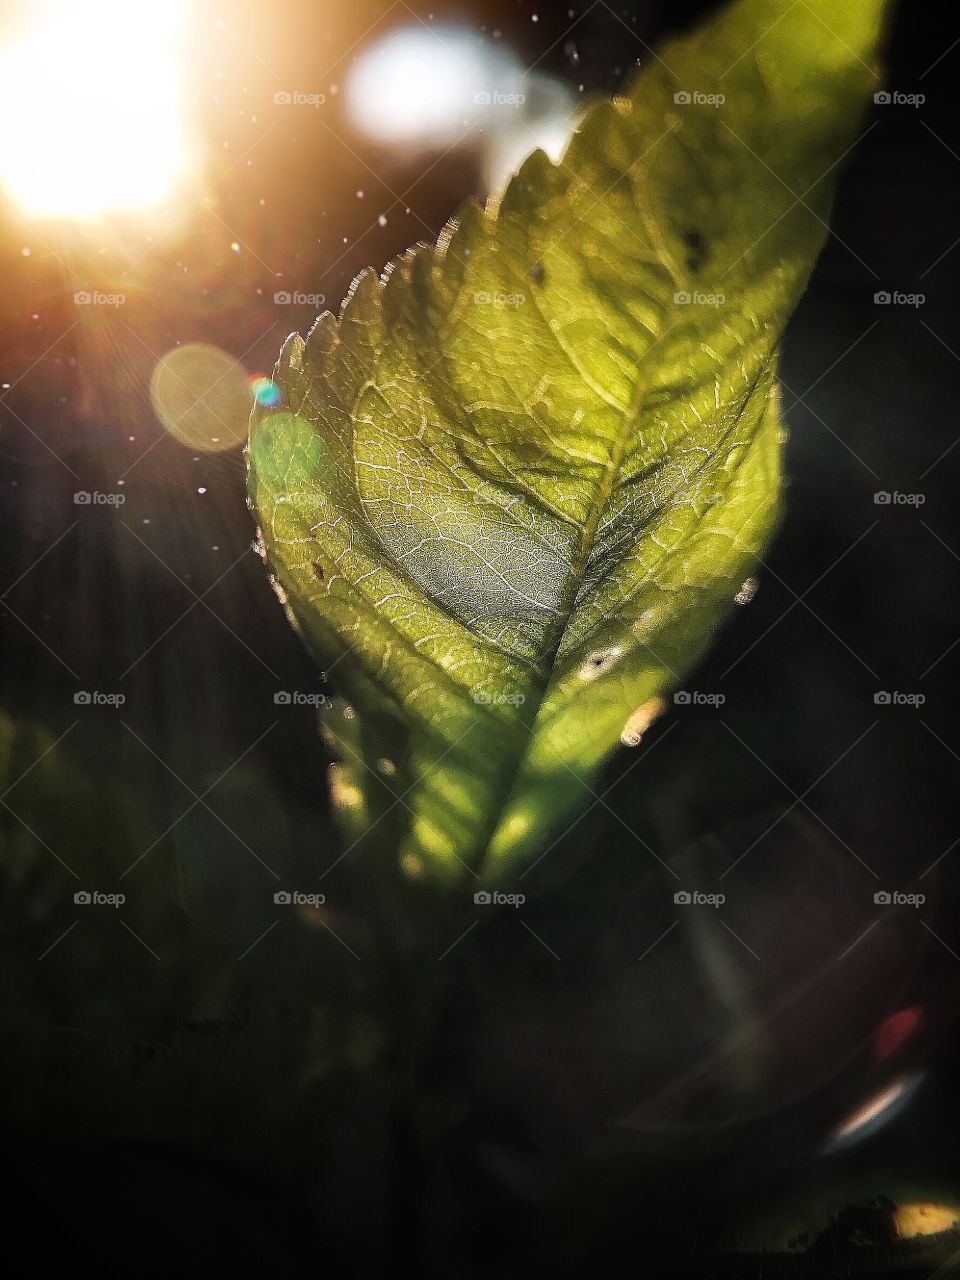 A close up of a tree leaf